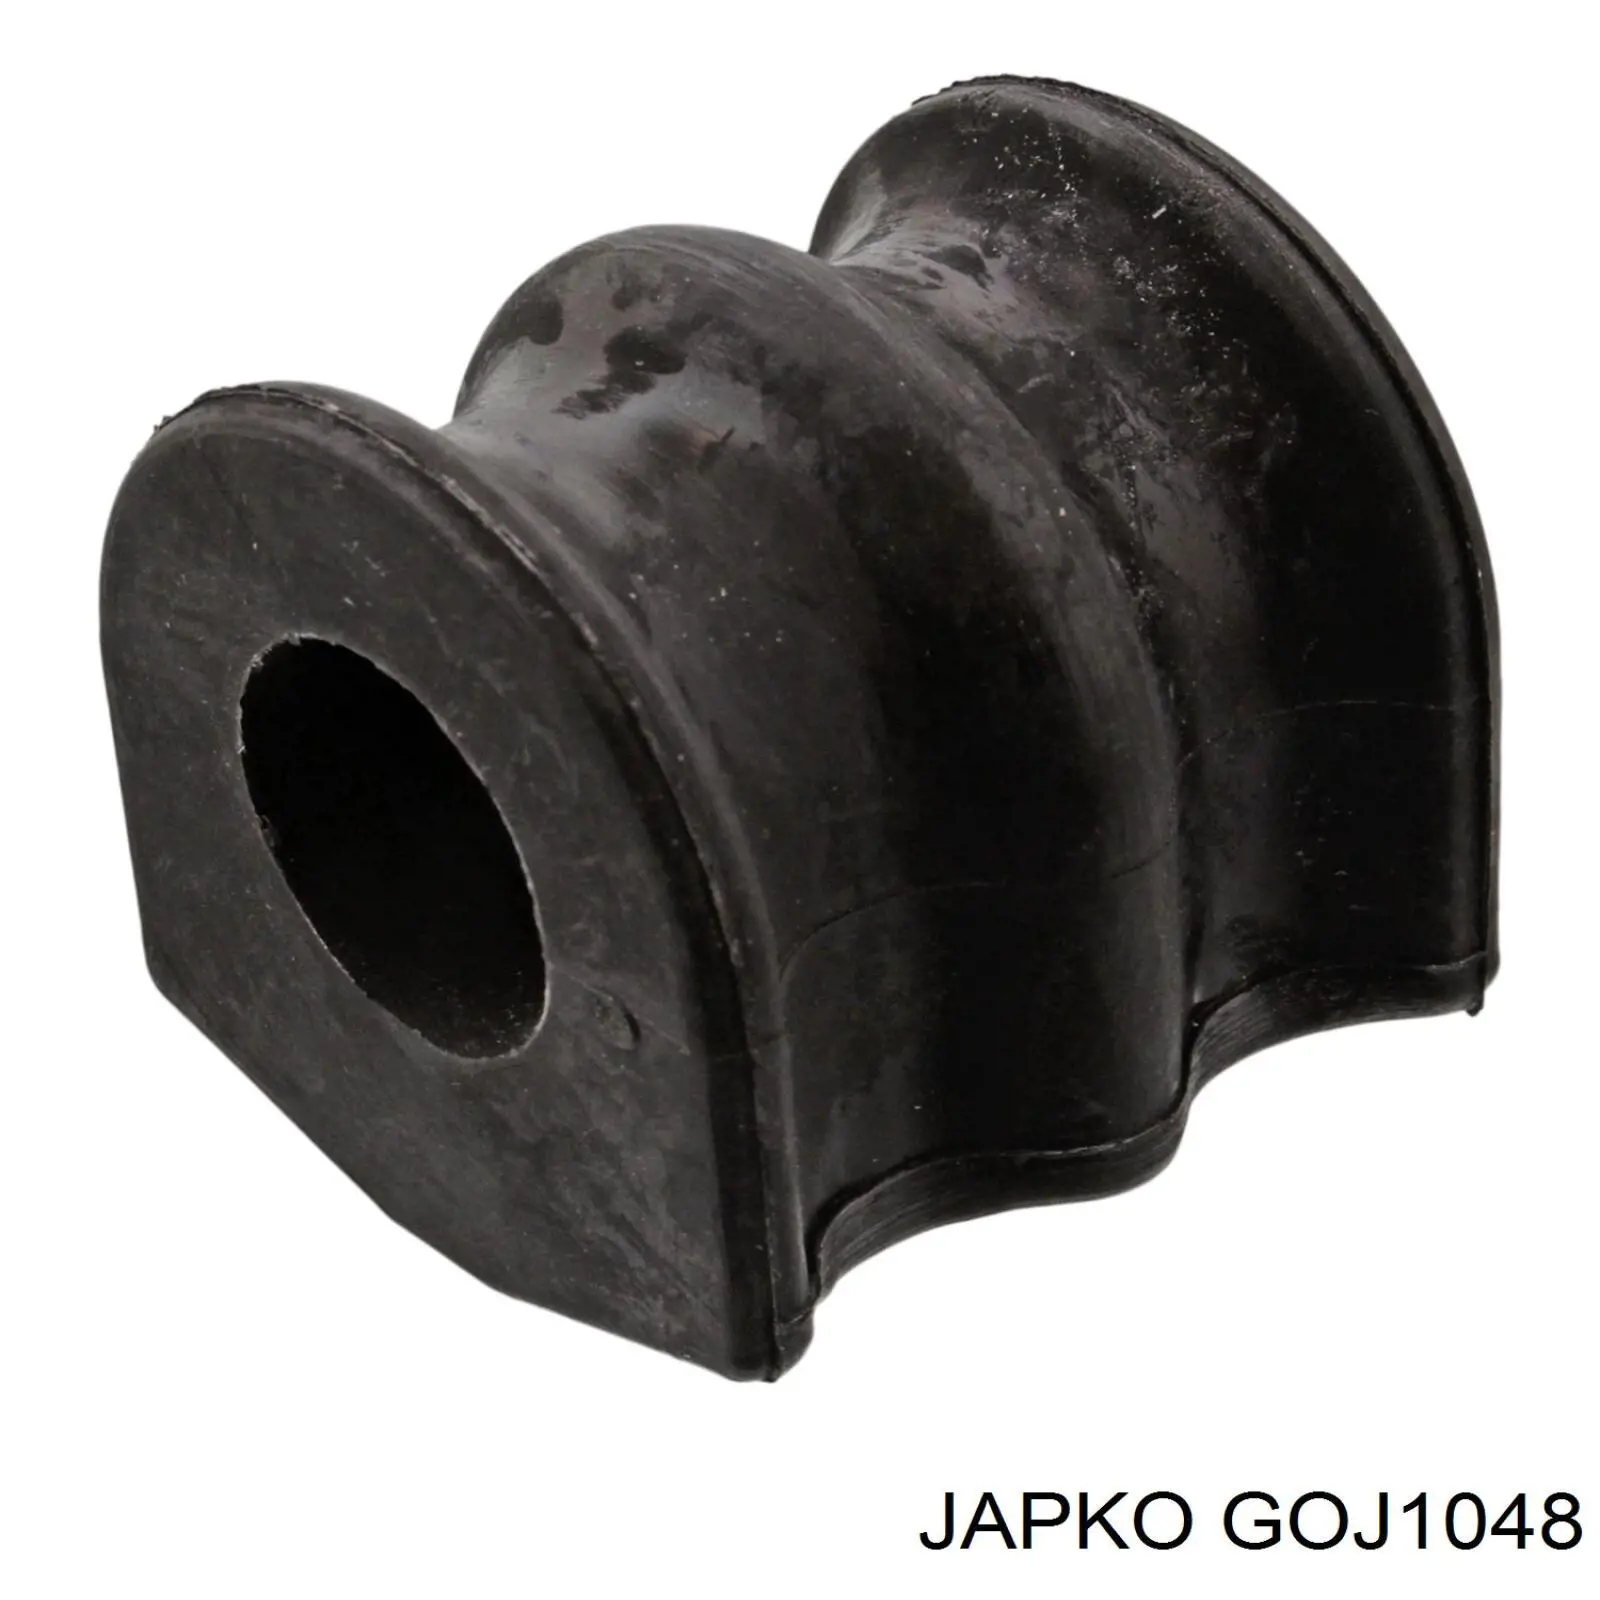 GOJ1048 Japko bucha de estabilizador traseiro